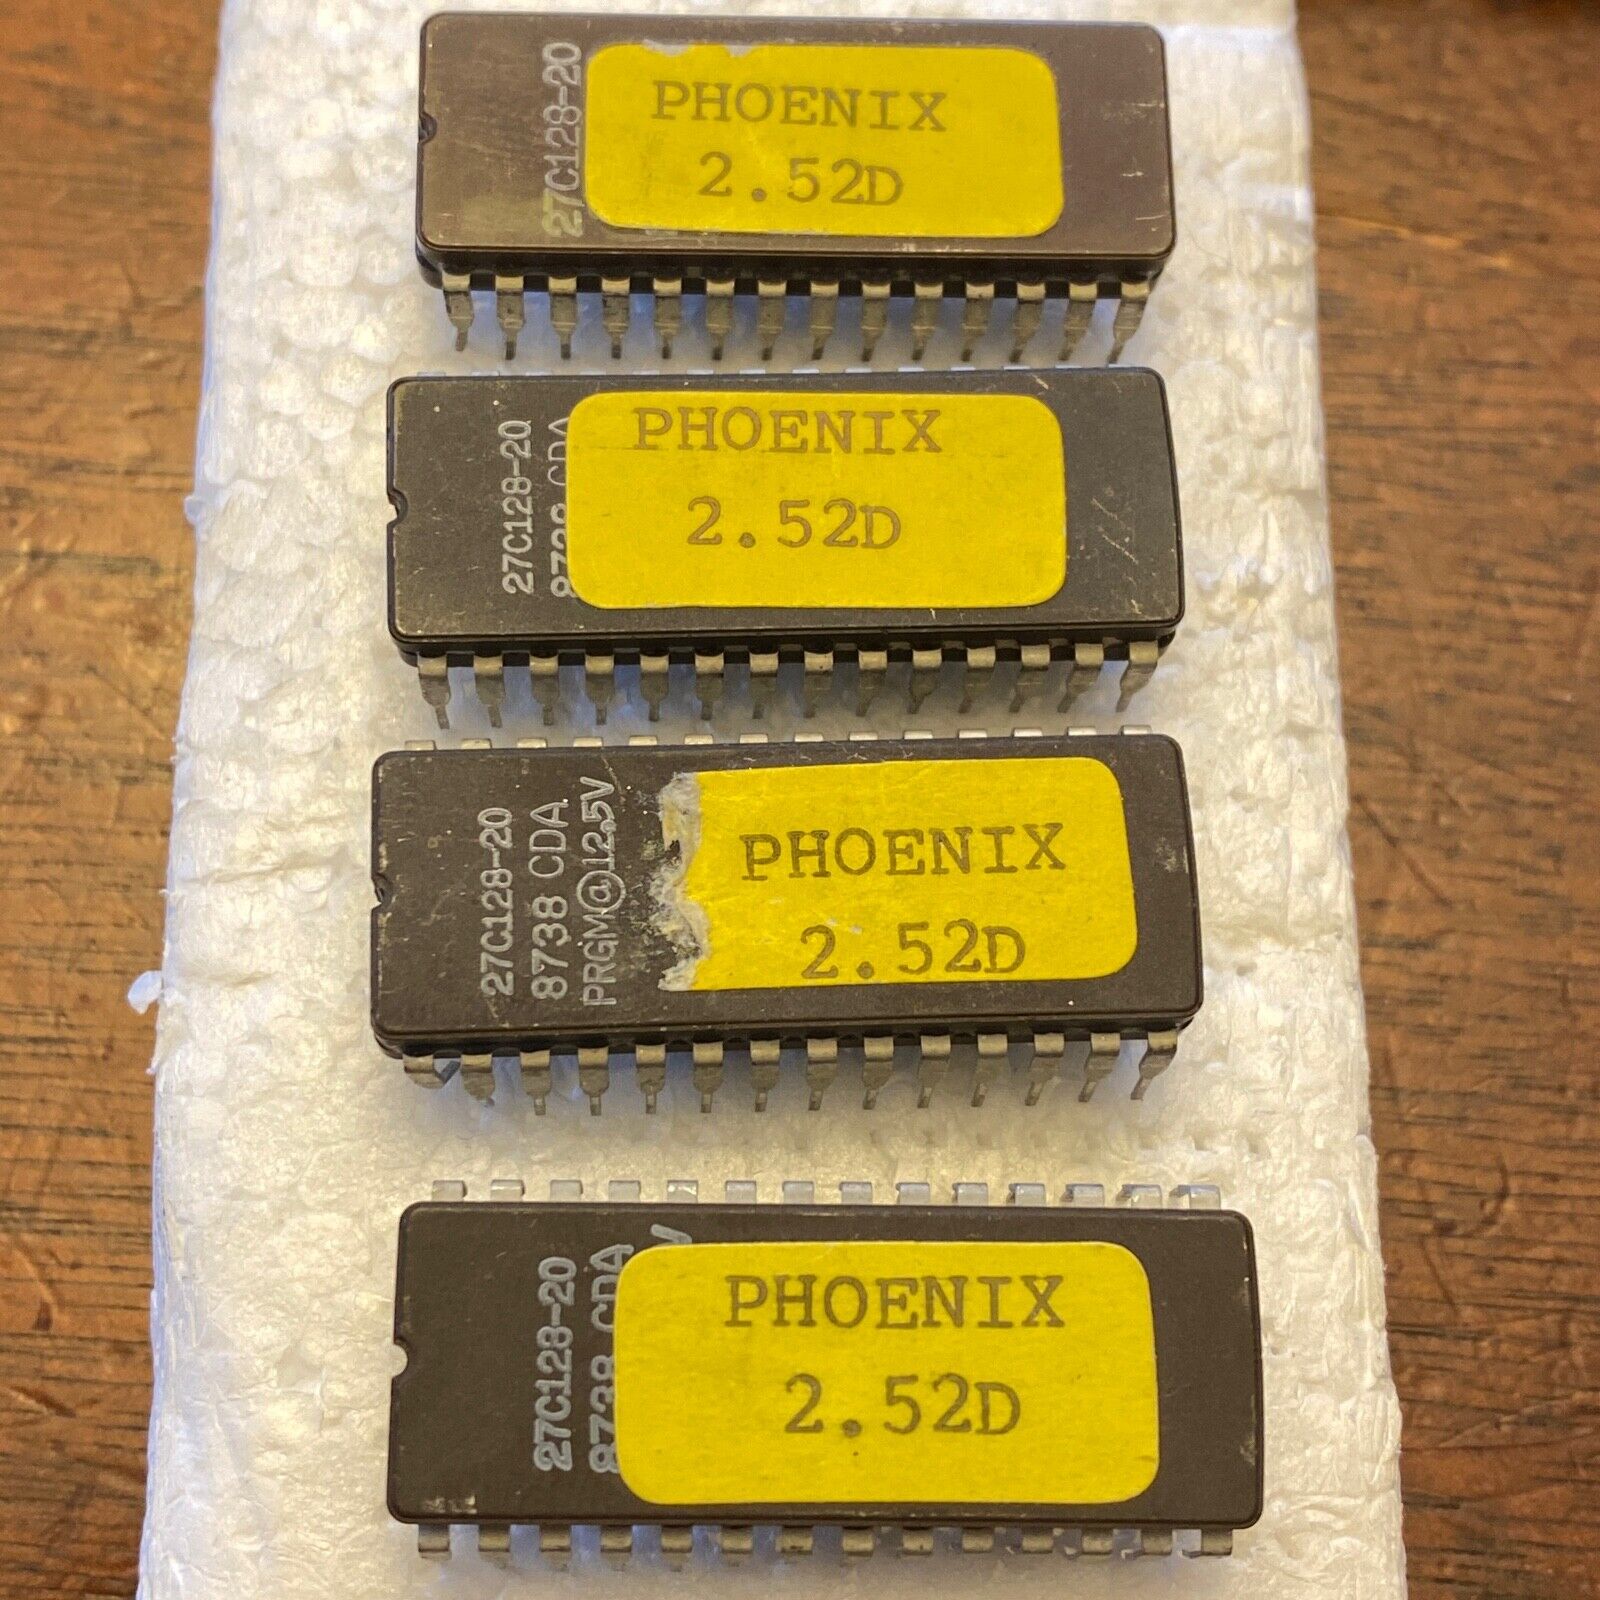 Phoenix 2.52 D BIOS 386 Computer Motherboard PC 1986 1990 28 Pin 386DX Vintage